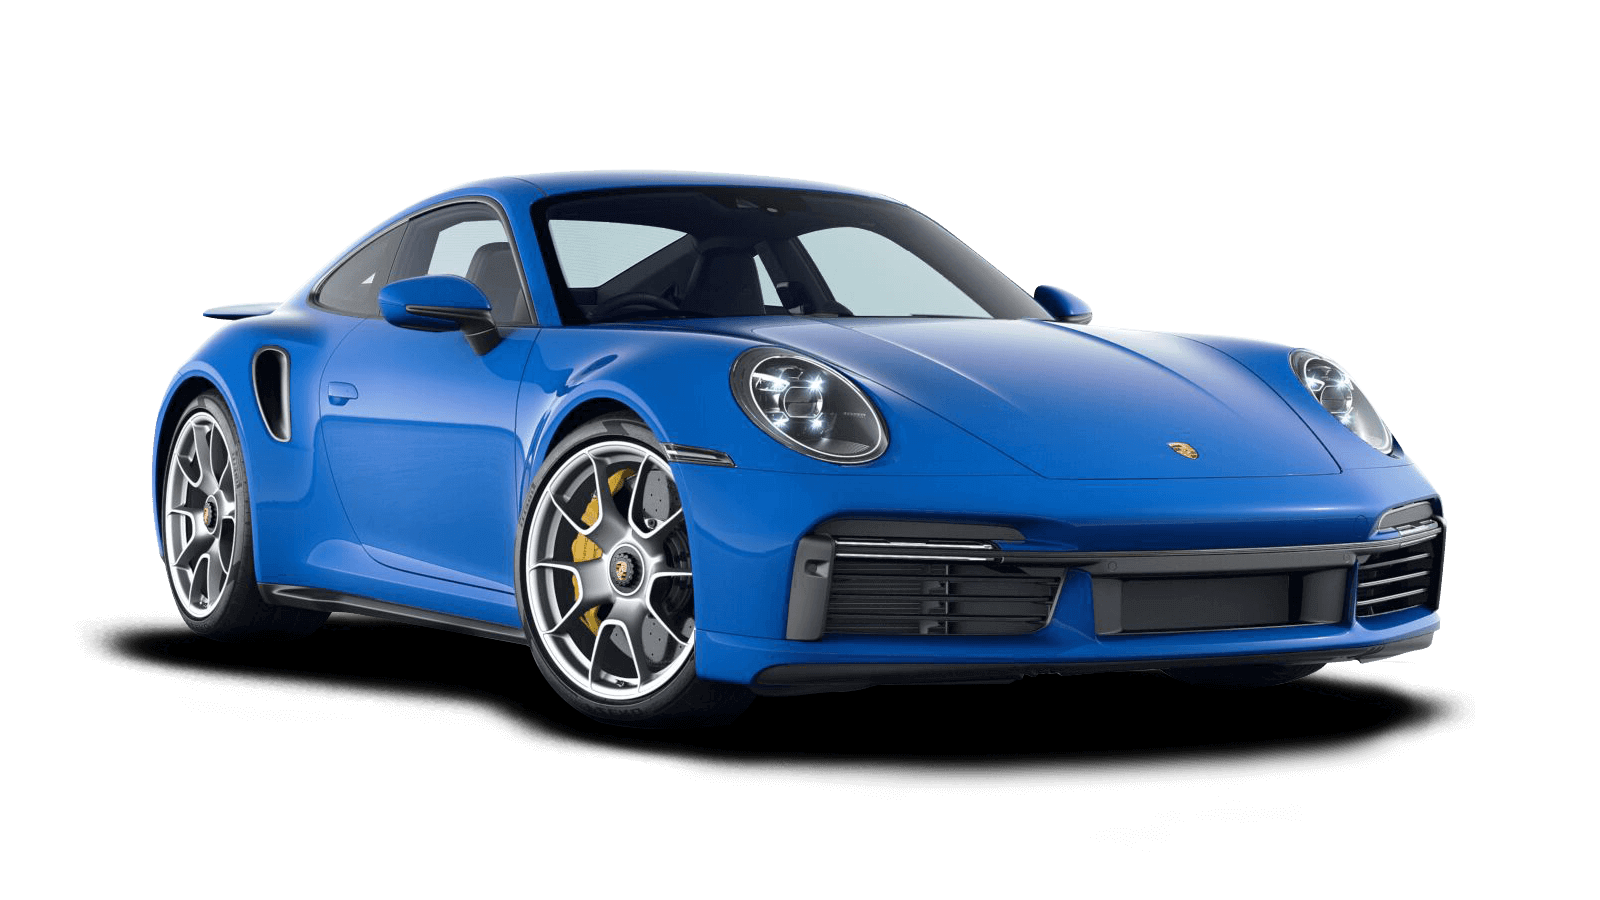  Porsche 911 Turbo S